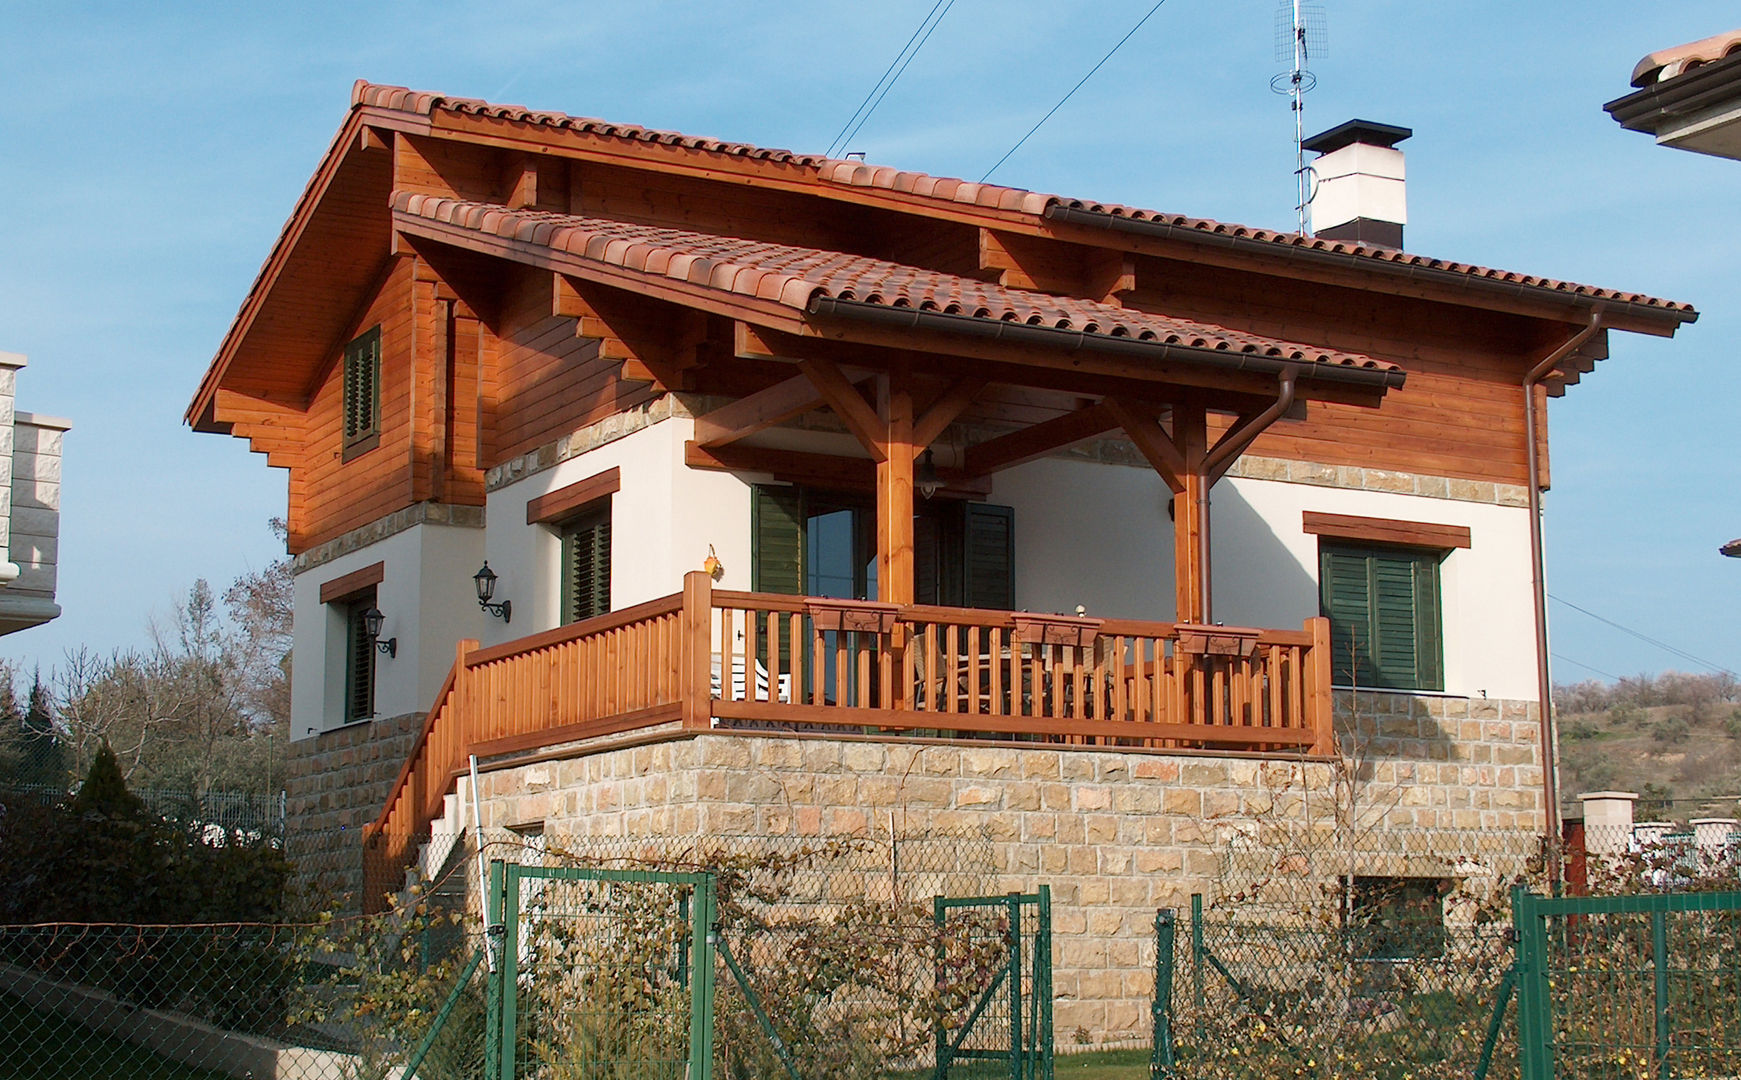 RUSTICASA | 100 projetos | Portugal + Espanha, RUSTICASA RUSTICASA Chalés e casas de madeira Madeira maciça Multi colorido